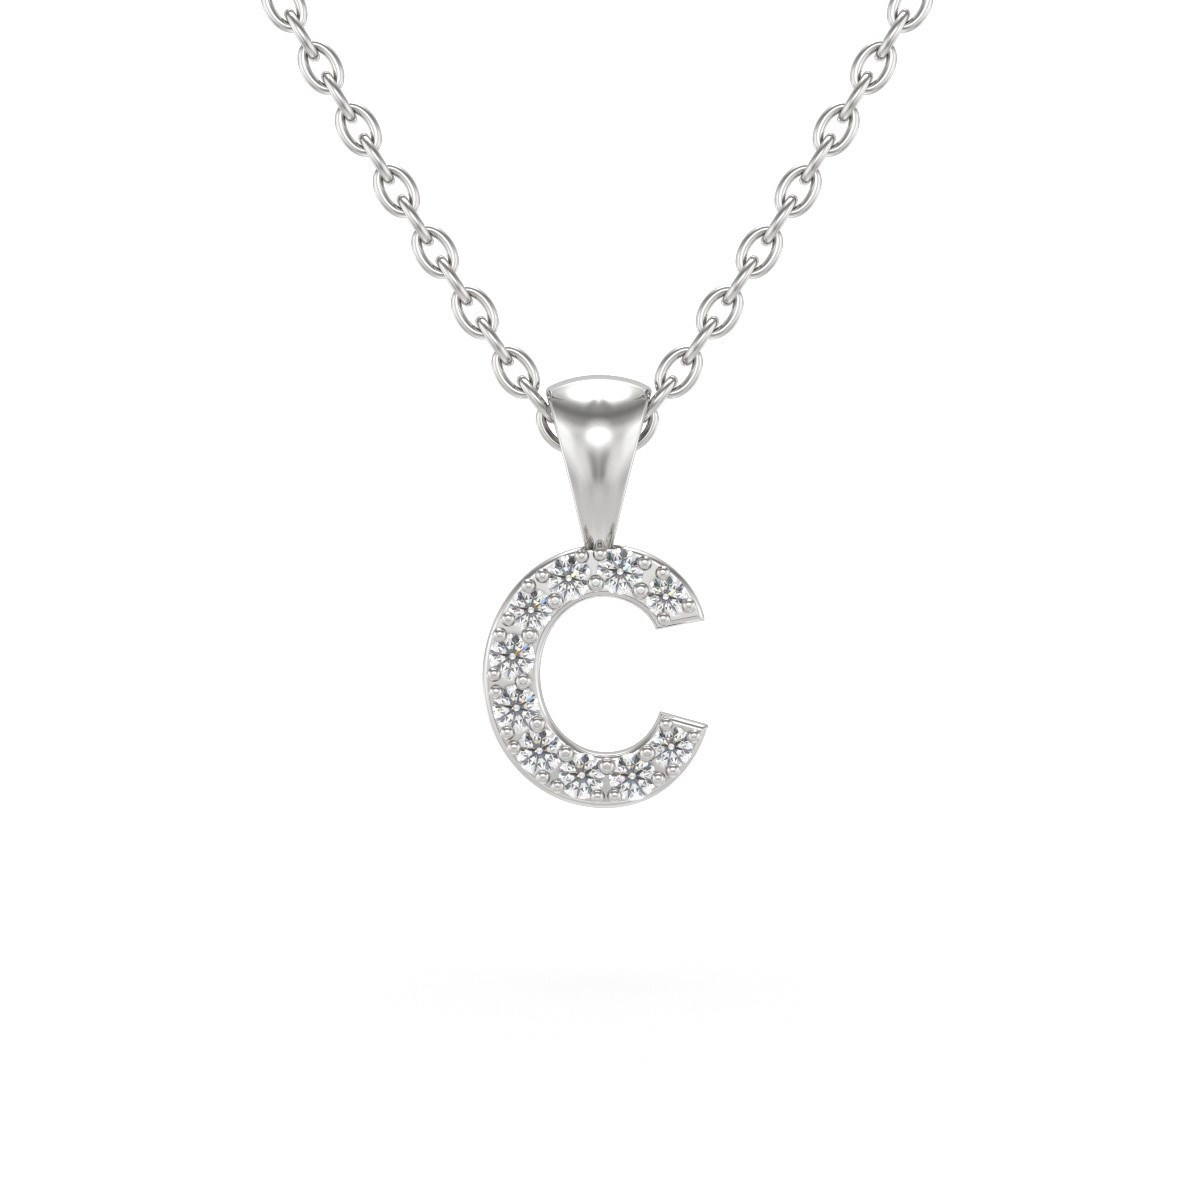 Collier Pendentif ADEN Lettre C Or 750 Blanc Diamant Chaine Or 750 incluse 0.72grs